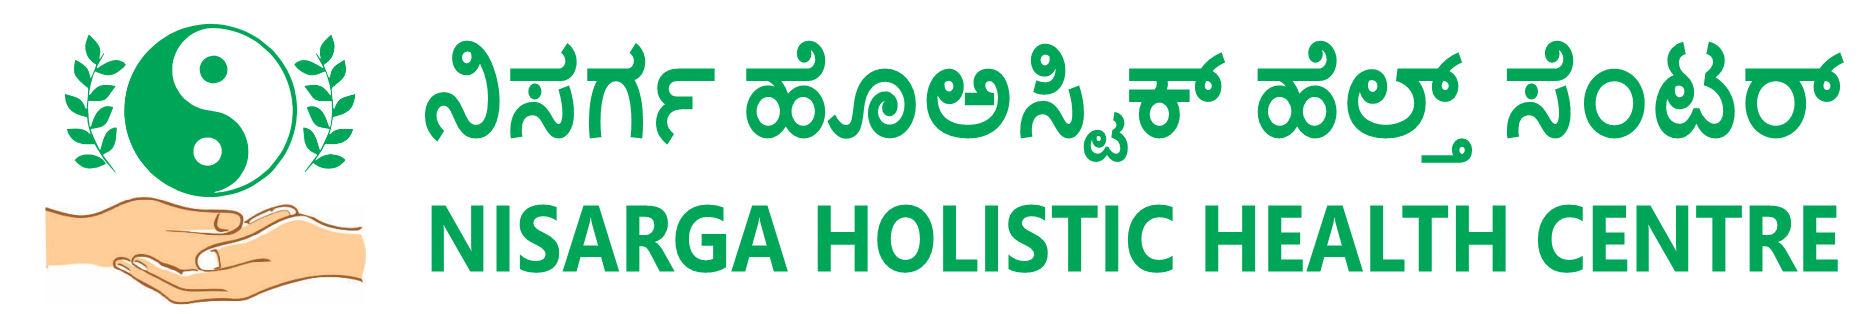 Nisarga Holistic Health Centre